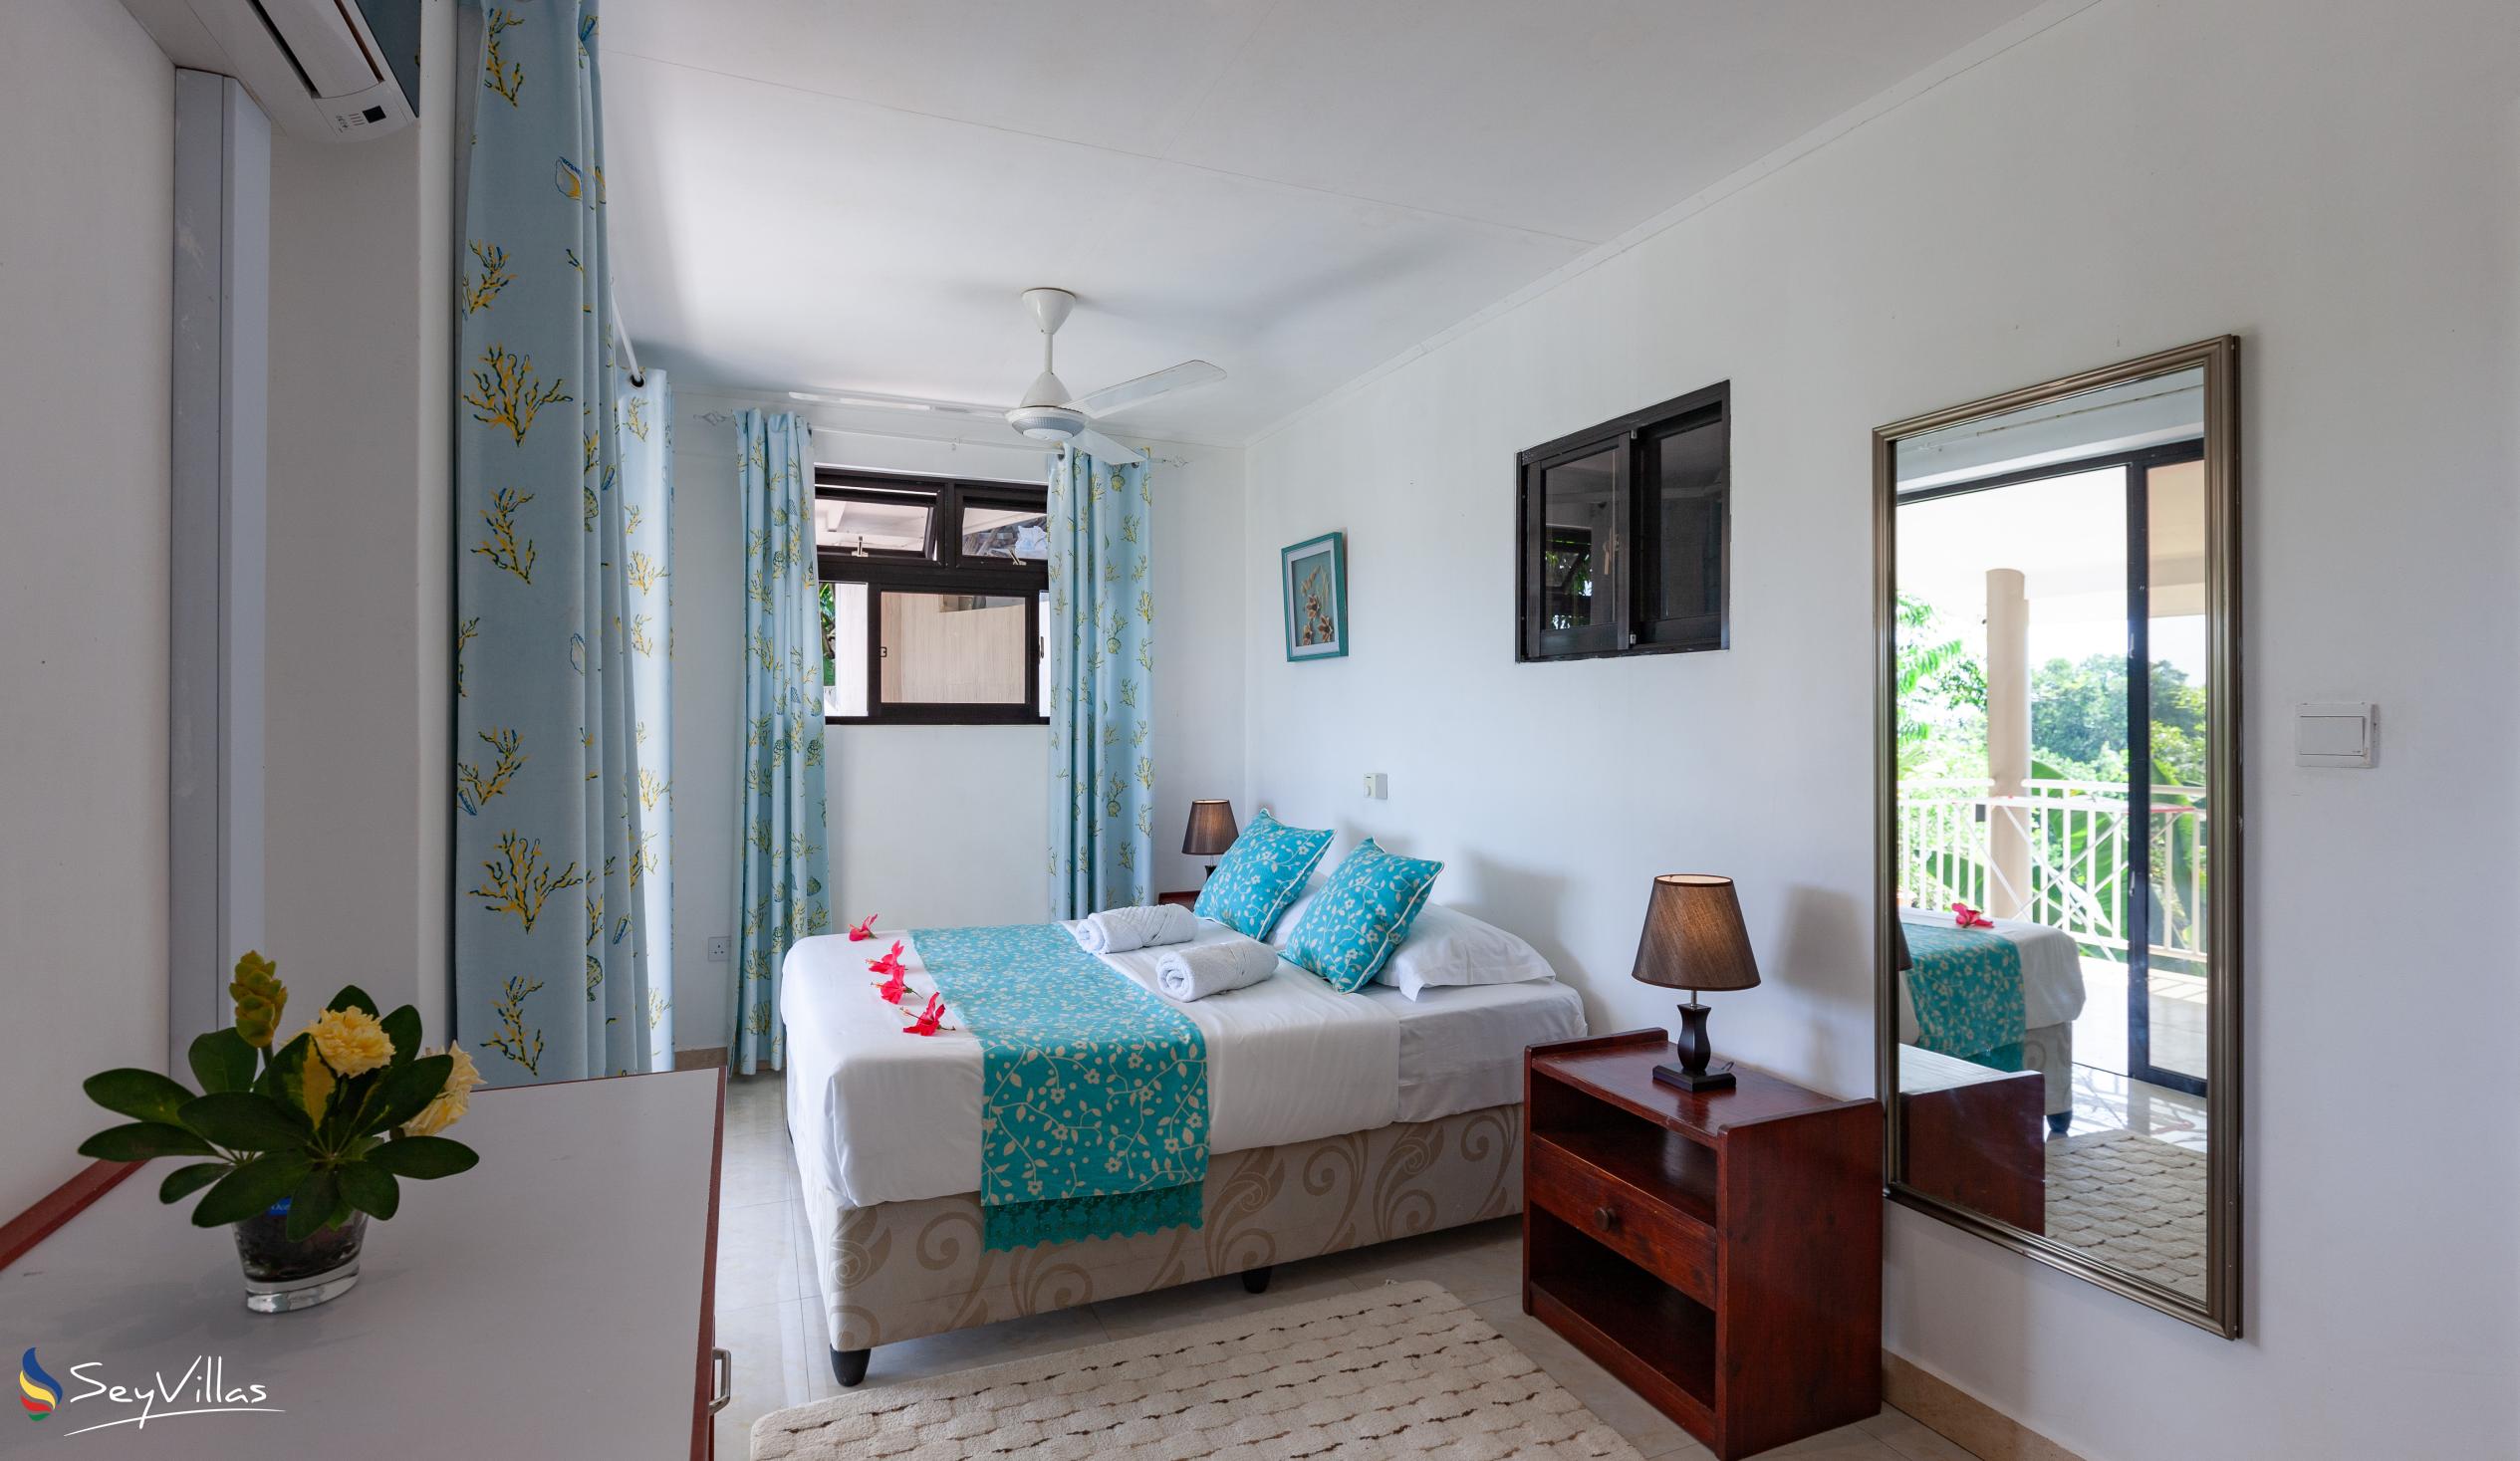 Foto 16: Myra's Self Catering Apartment - Appartamento con 1 camera - Praslin (Seychelles)